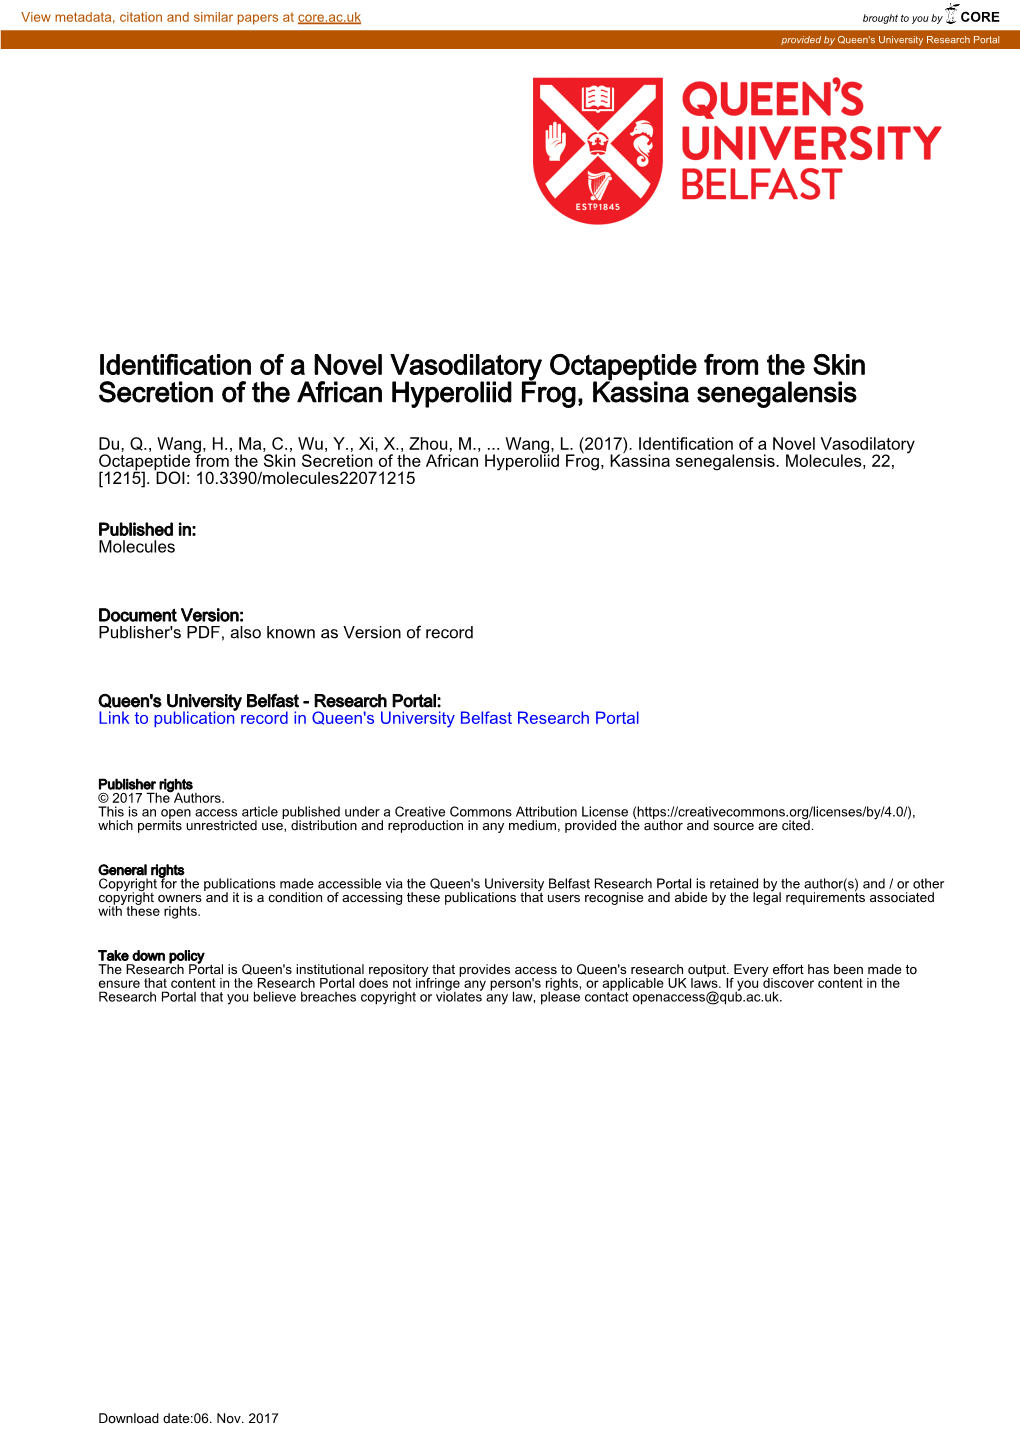 Identification of a Novel Vasodilatory Octapeptide from the Skin Secretion of the African Hyperoliid Frog, Kassina Senegalensis